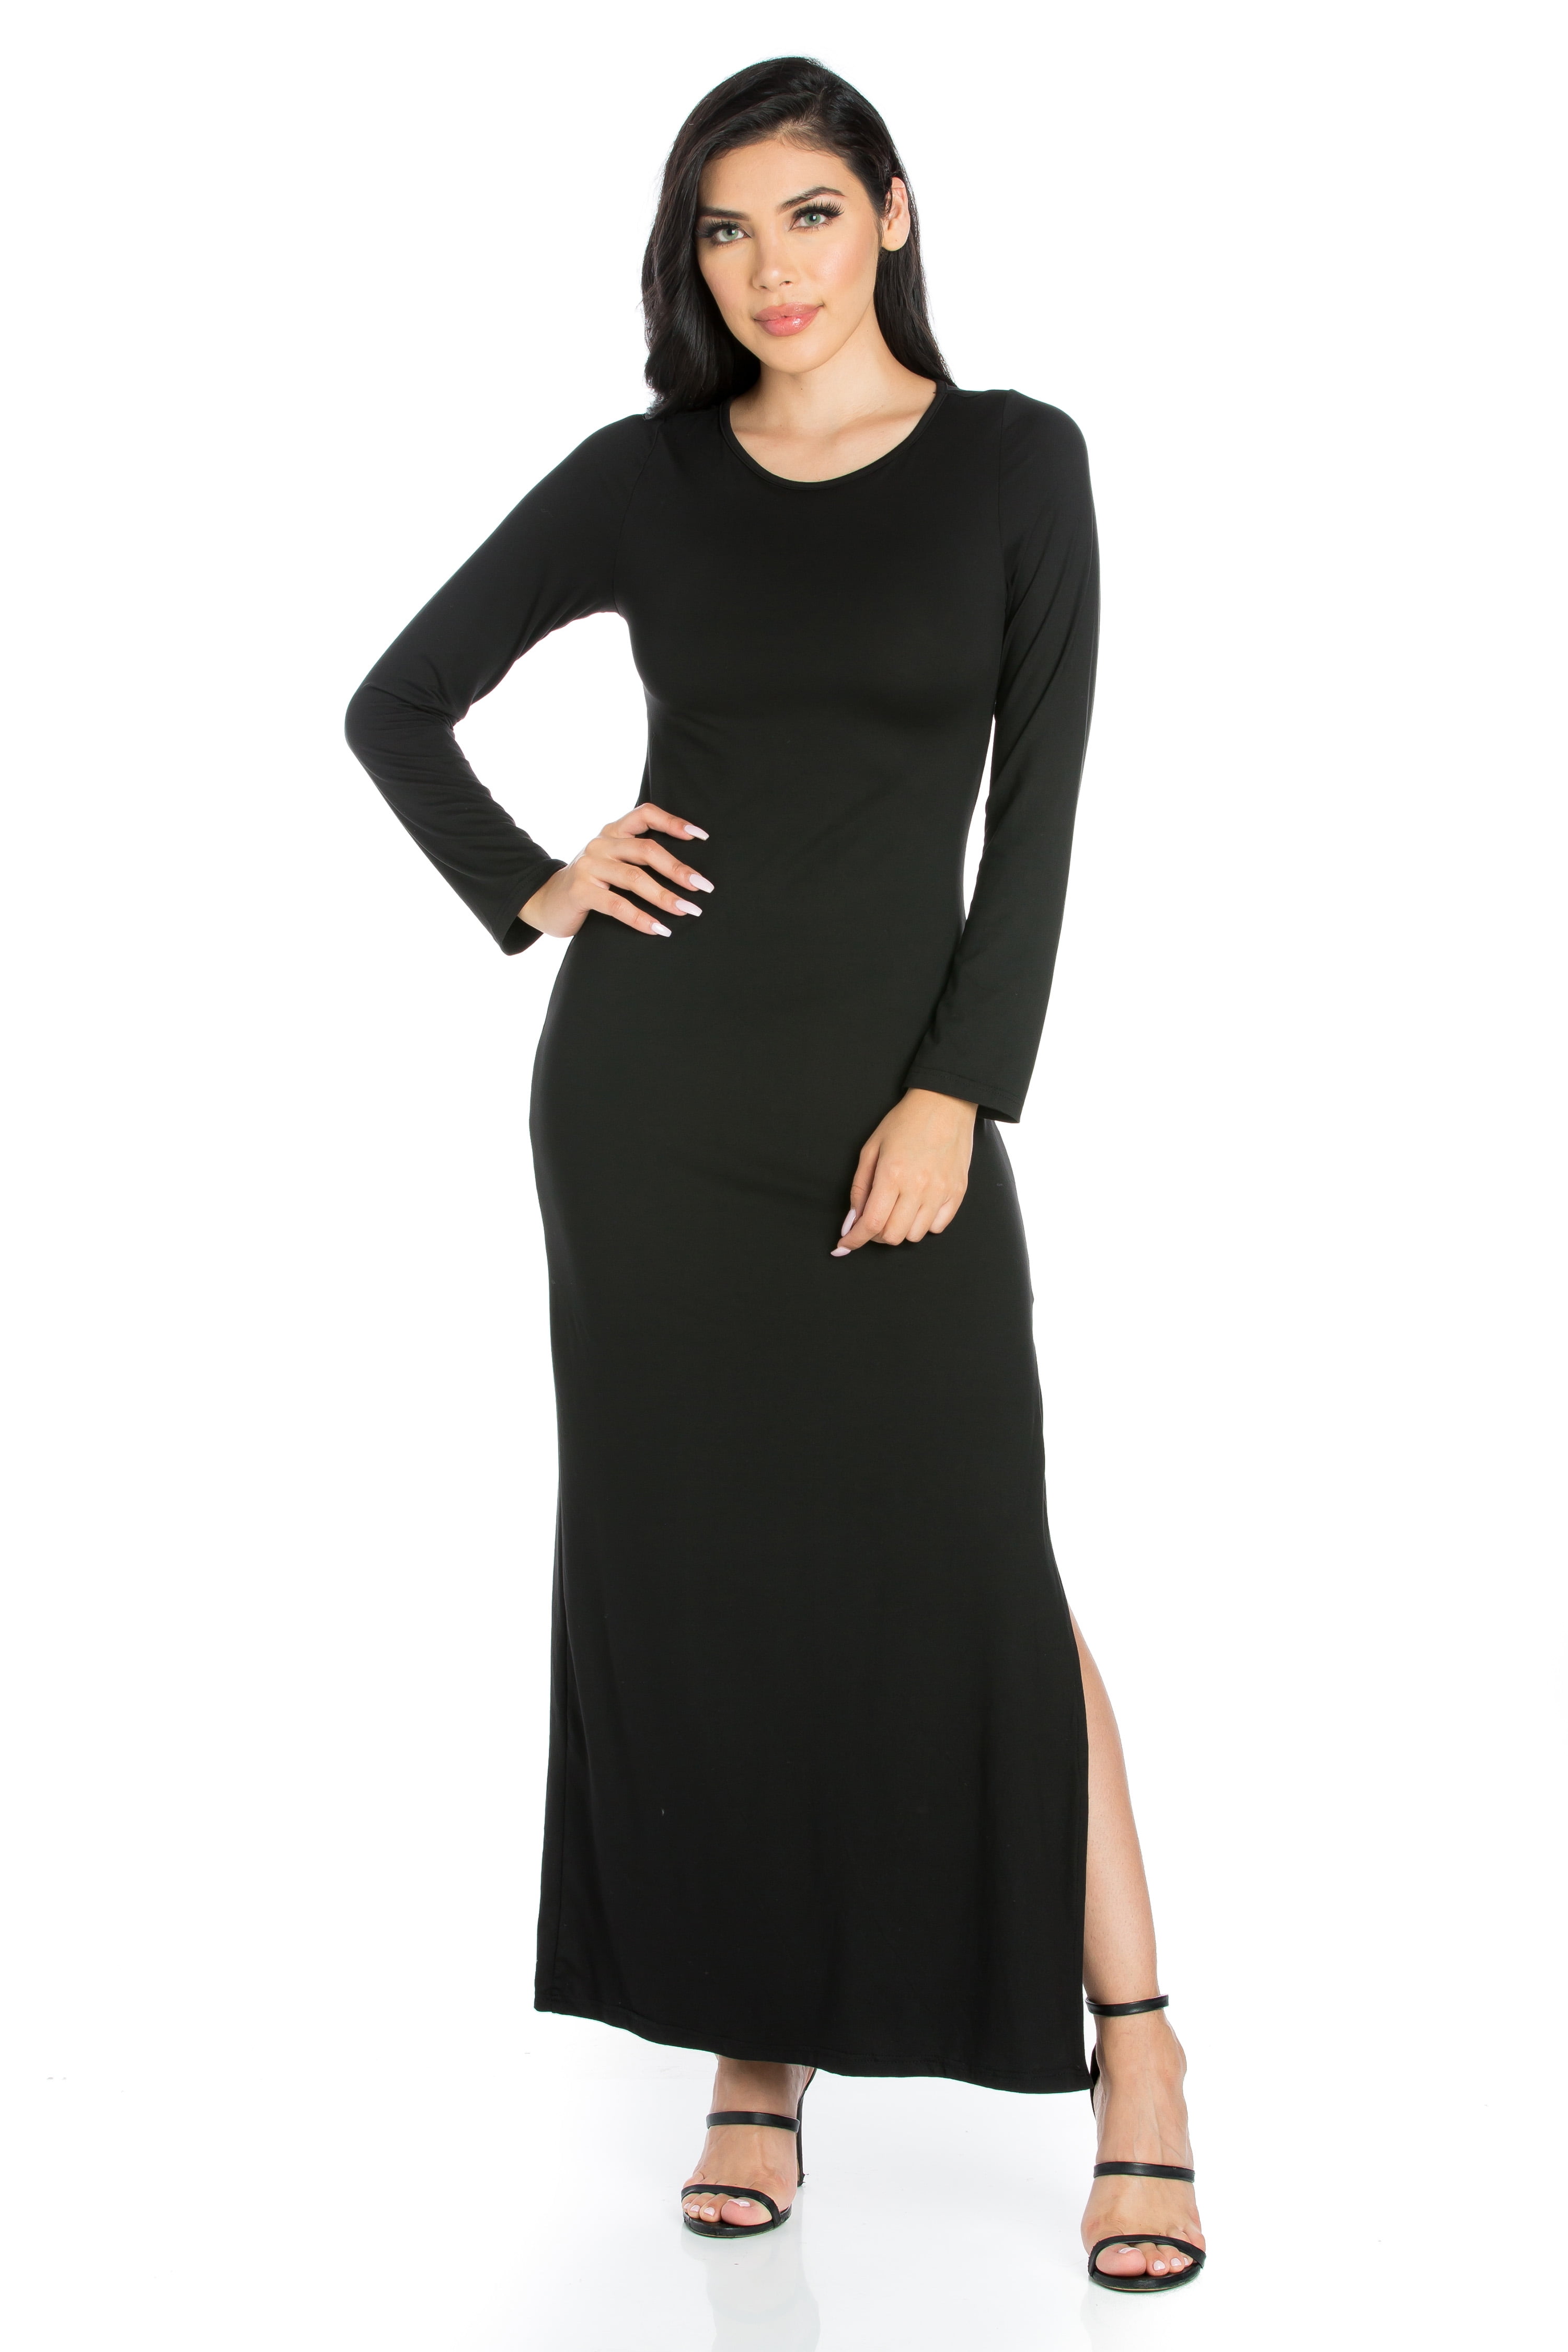 24seven Comfort Apparel Strut It Black Long Sleeve Side Slit Maxi Dress ...